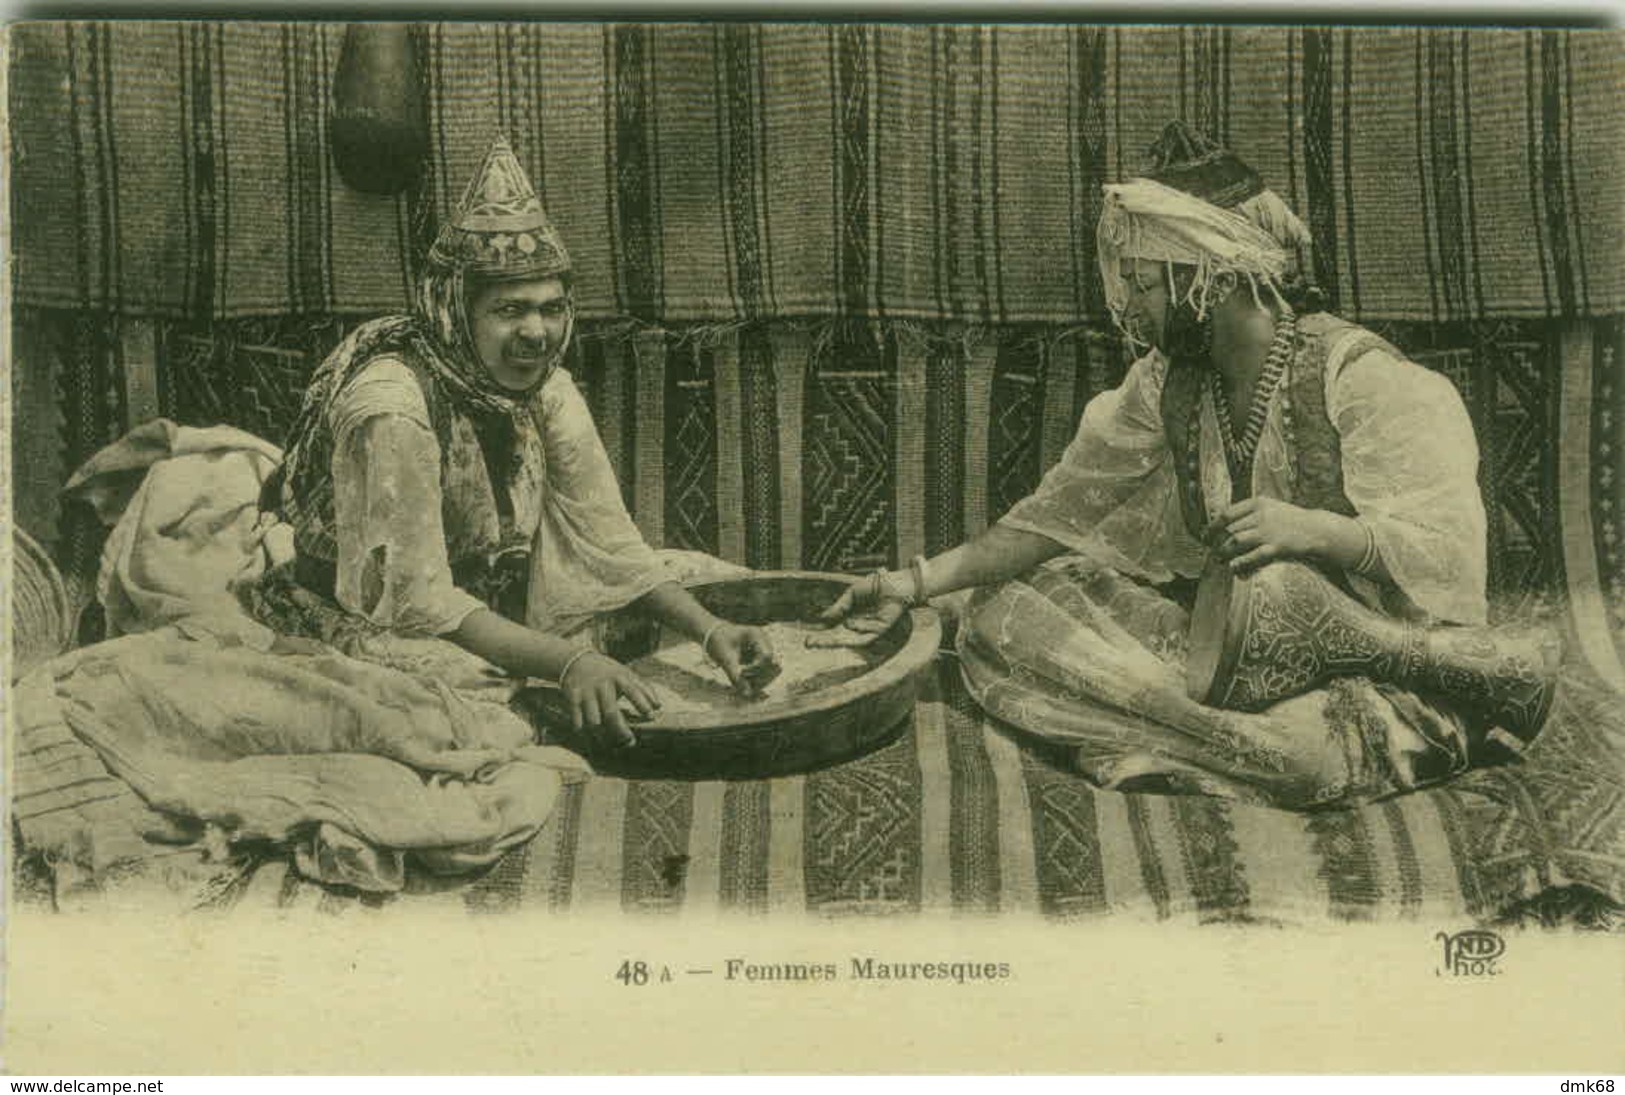 AFRICA - MAURITANIA - FEMMES MAURESQUES - EDIT ND PHOTO - 1910s  (7199) - Mauretanien